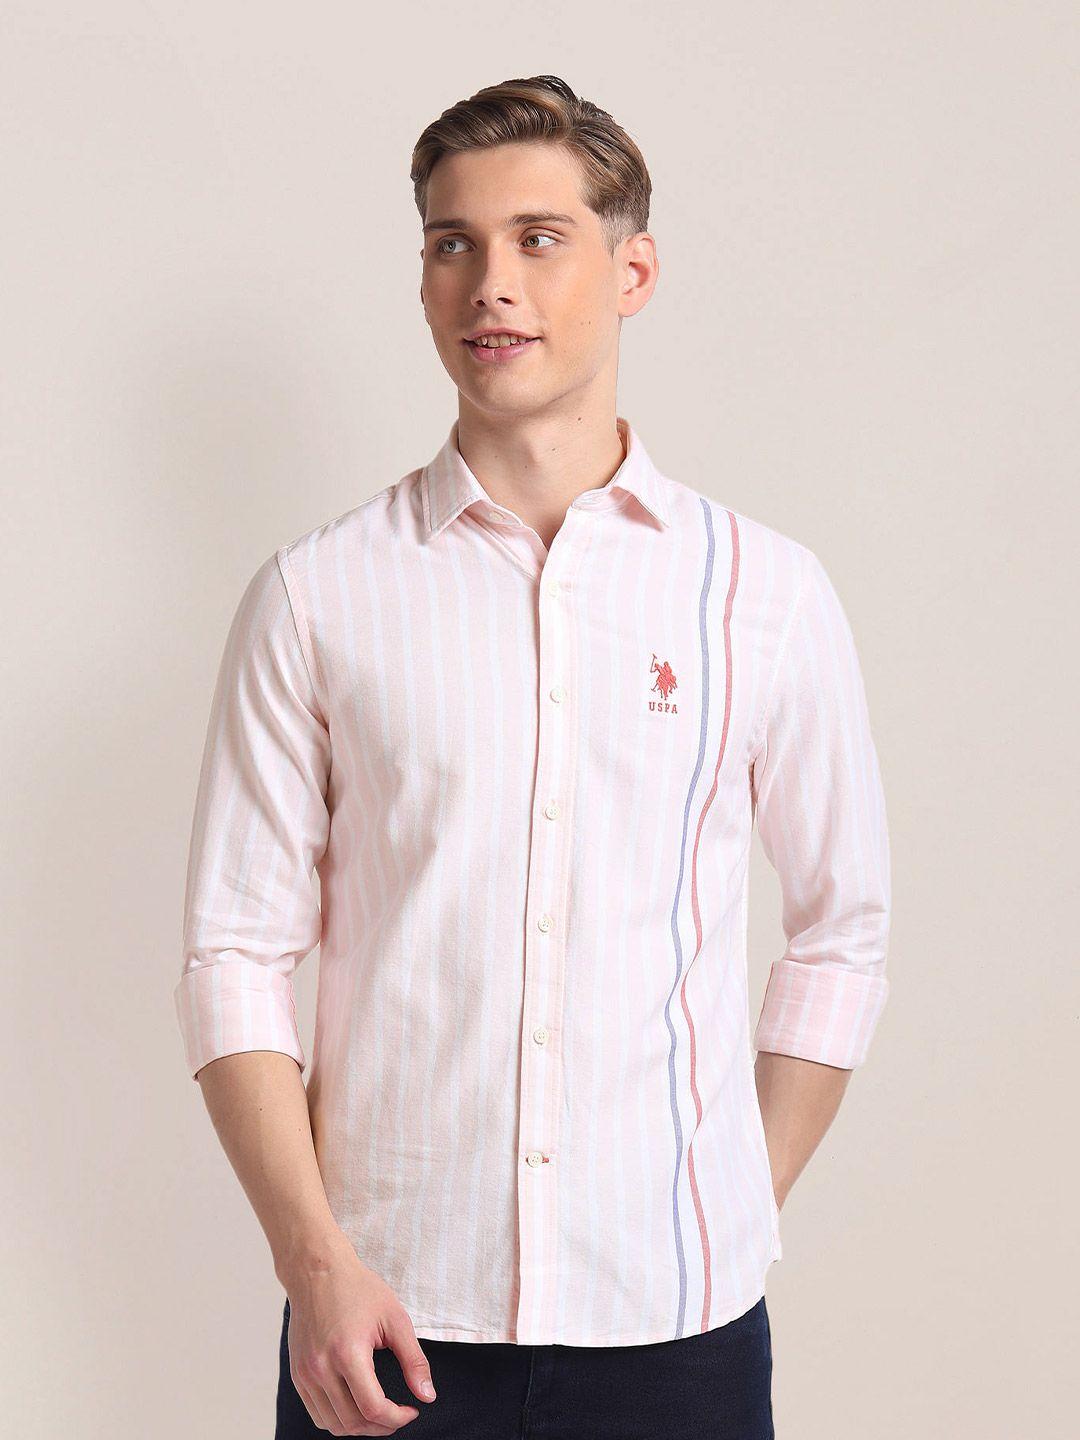 u.s. polo assn. vertical striped cotton shirt